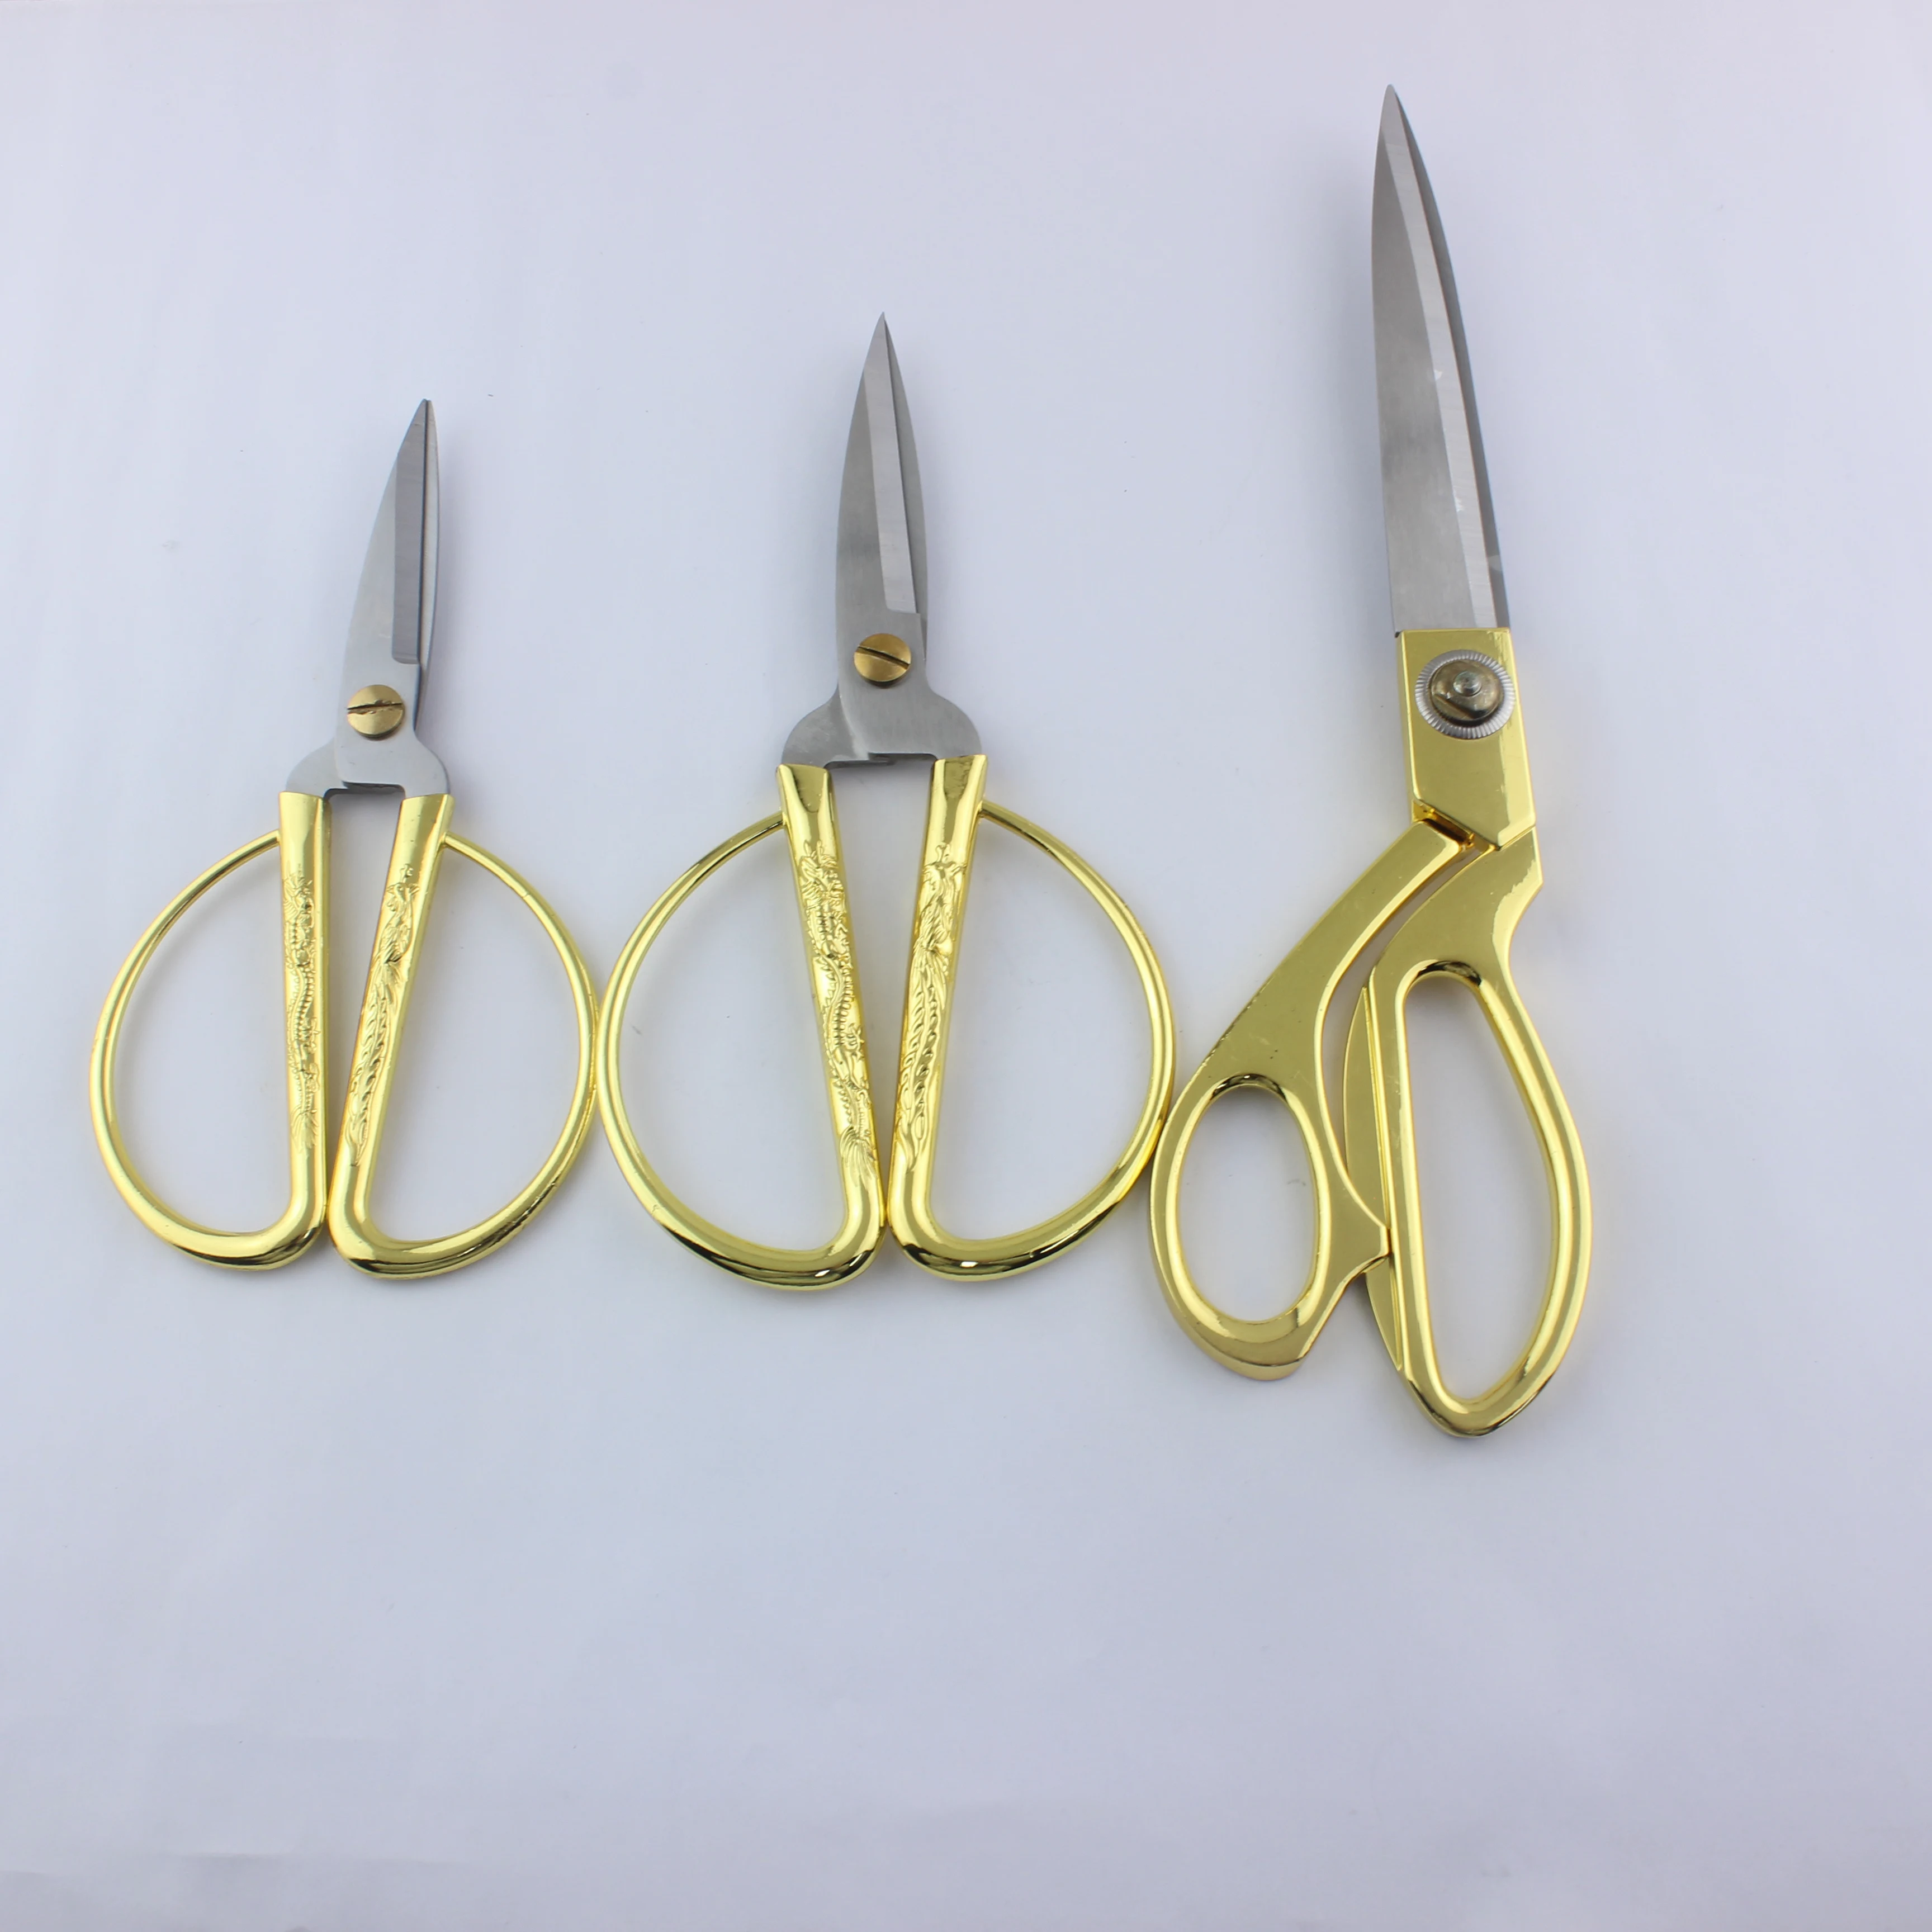 Tijeras dorada Stainless Steel Dragon Relief Design Shear Multi functional Cutting craft tailoring Golden sewing scissors